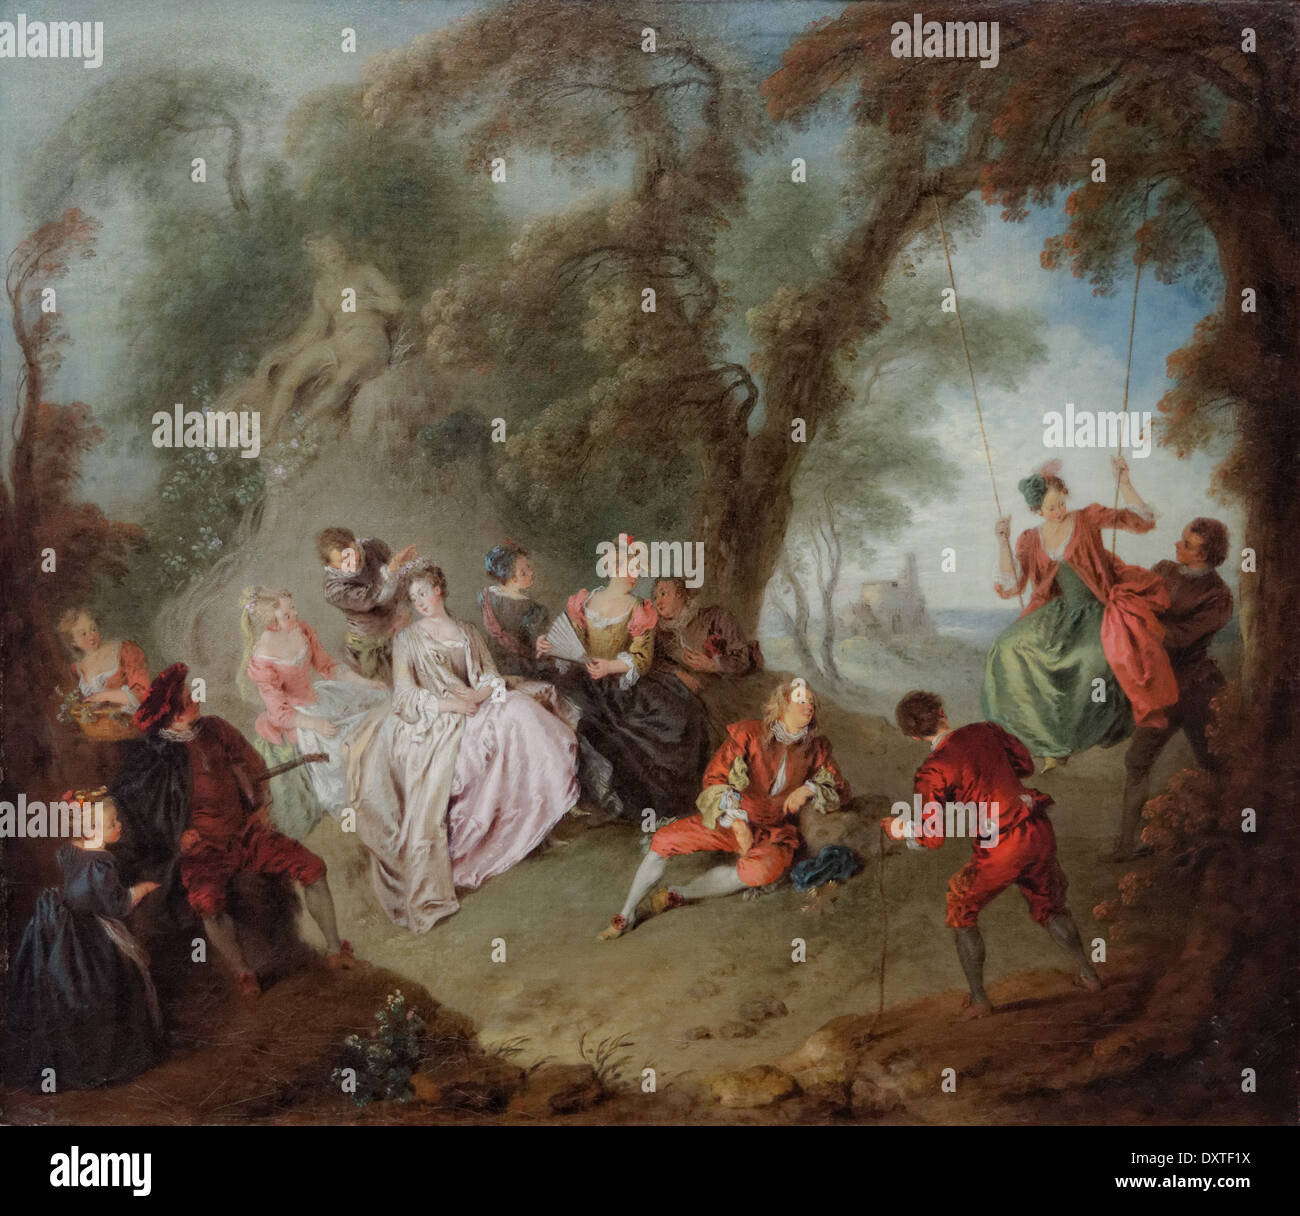 Jean-Baptiste Pater- The Swing - XVIII th Century - French School - Gemäldegalerie - Berlin Stock Photo